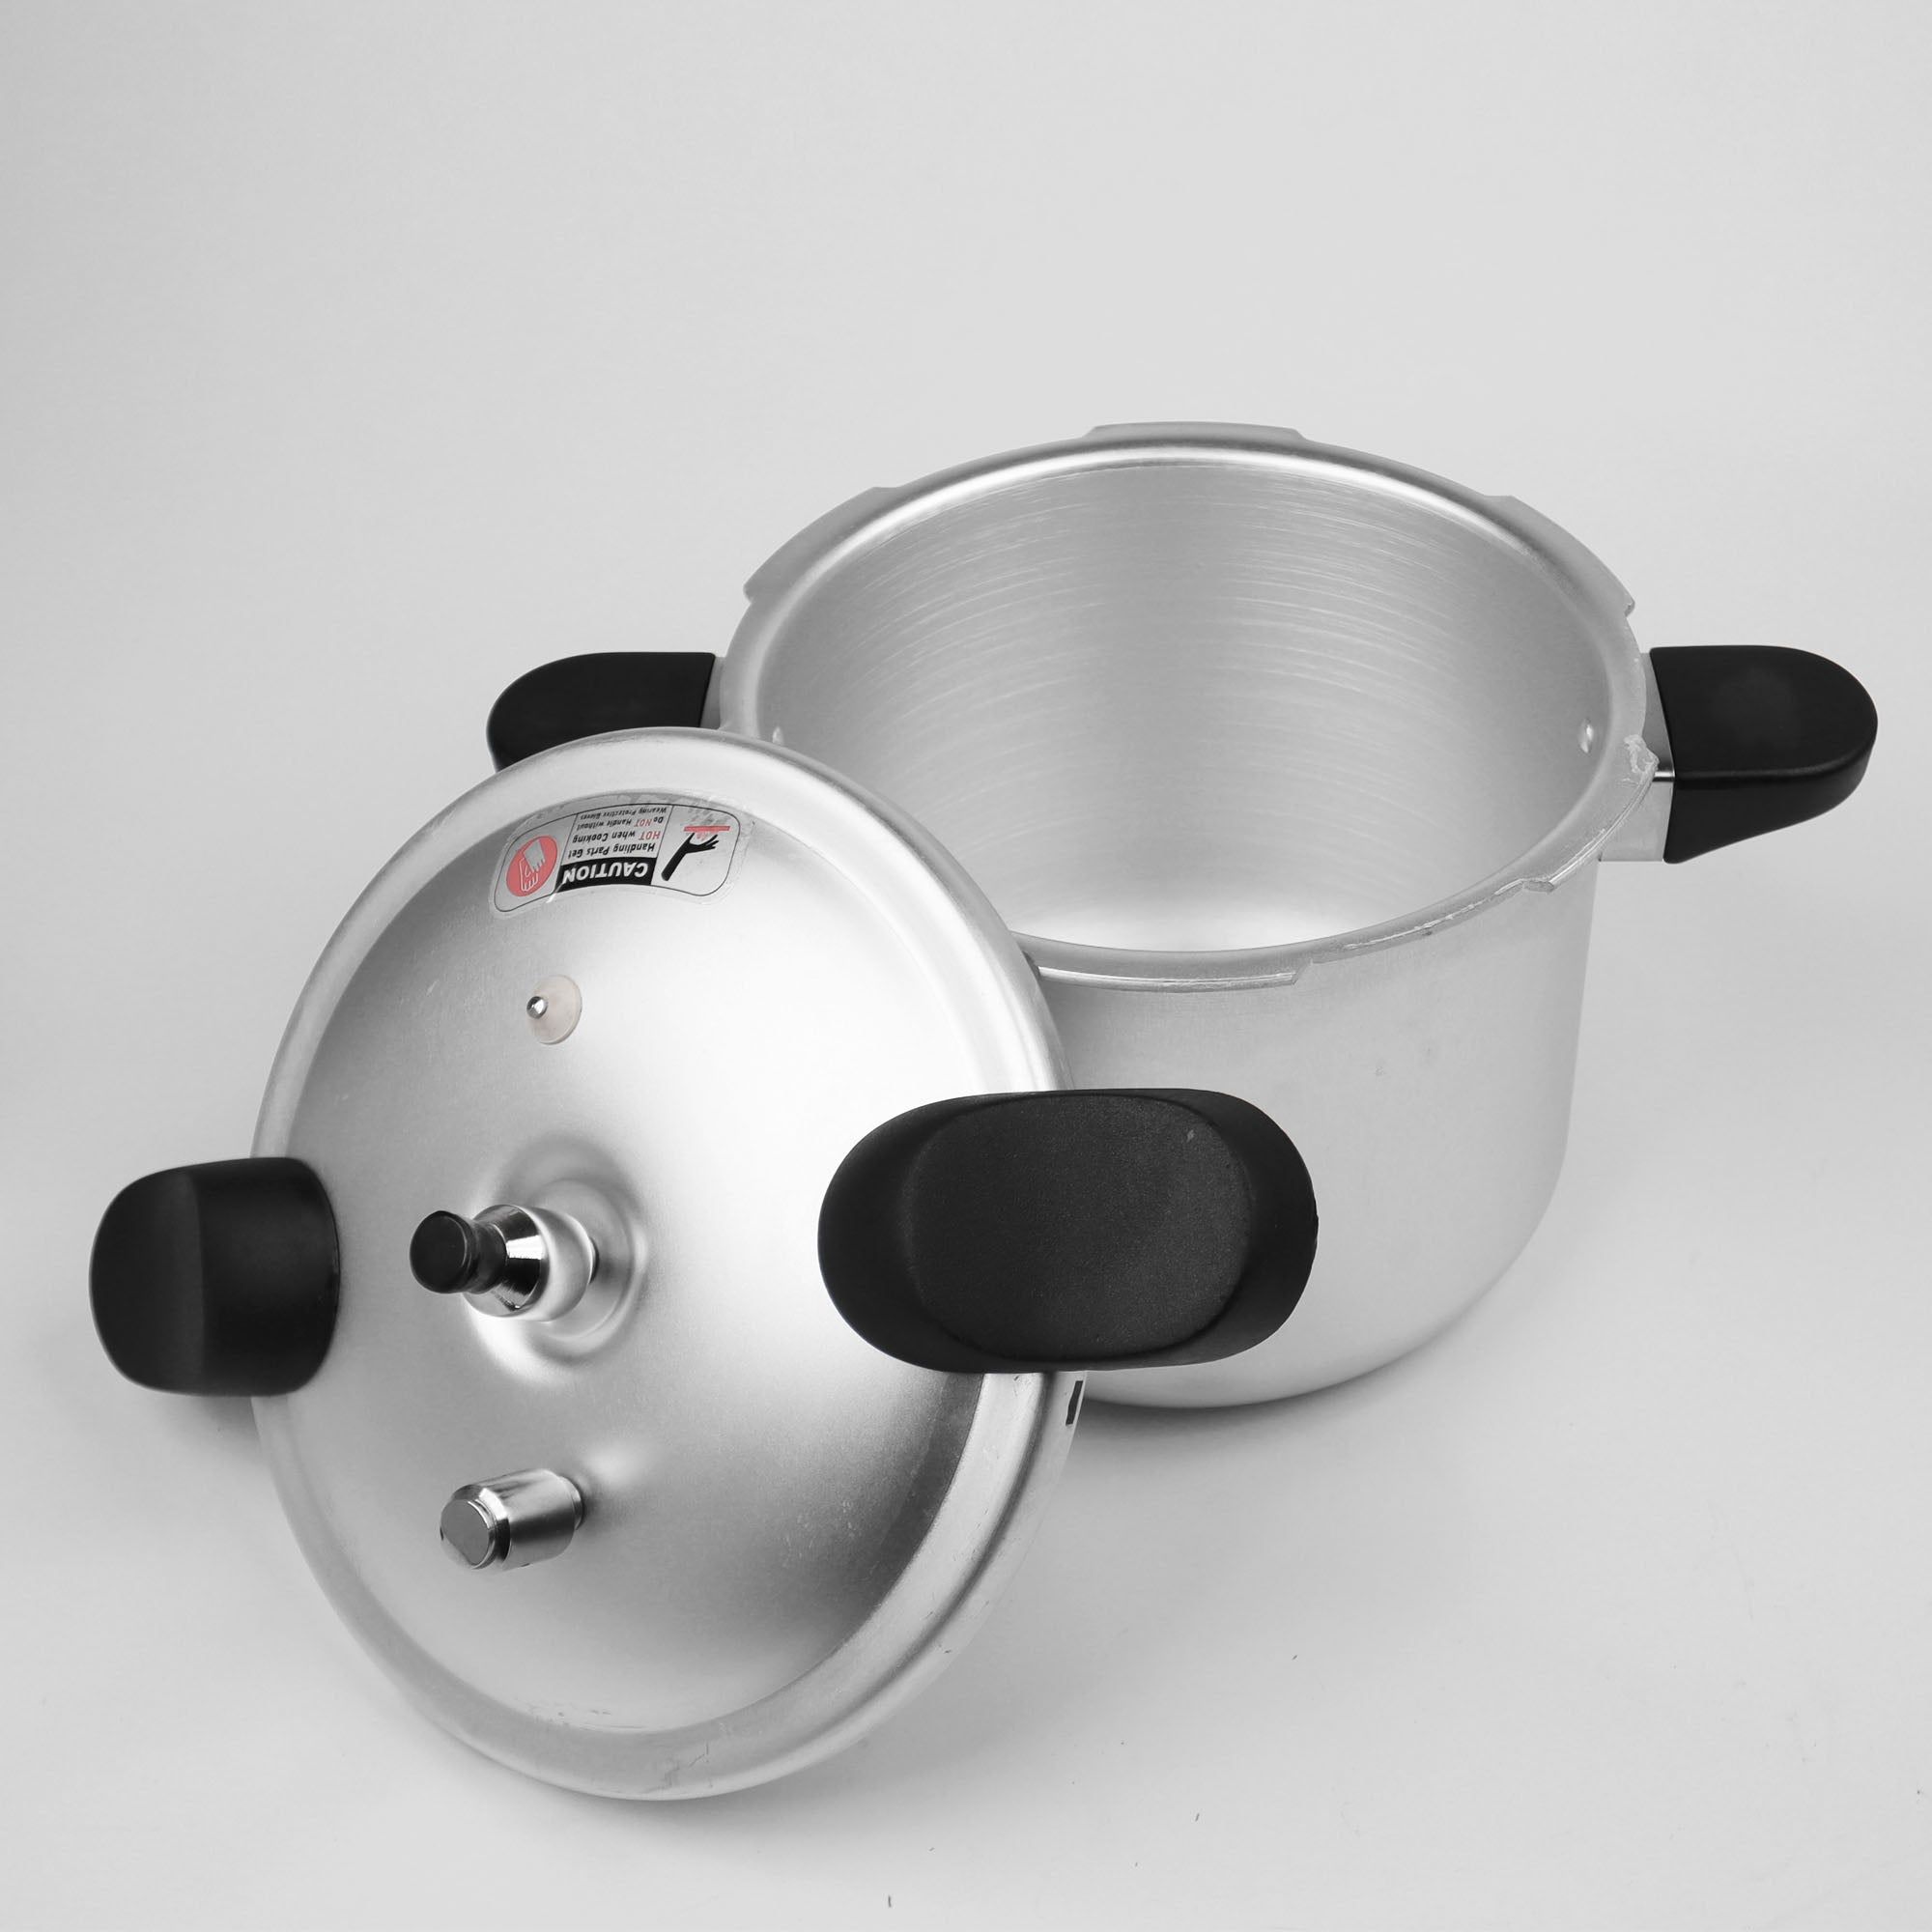 CHEF Best Pressure Cooker 1205 Aluminum Sleek Handles - [5 Liter]